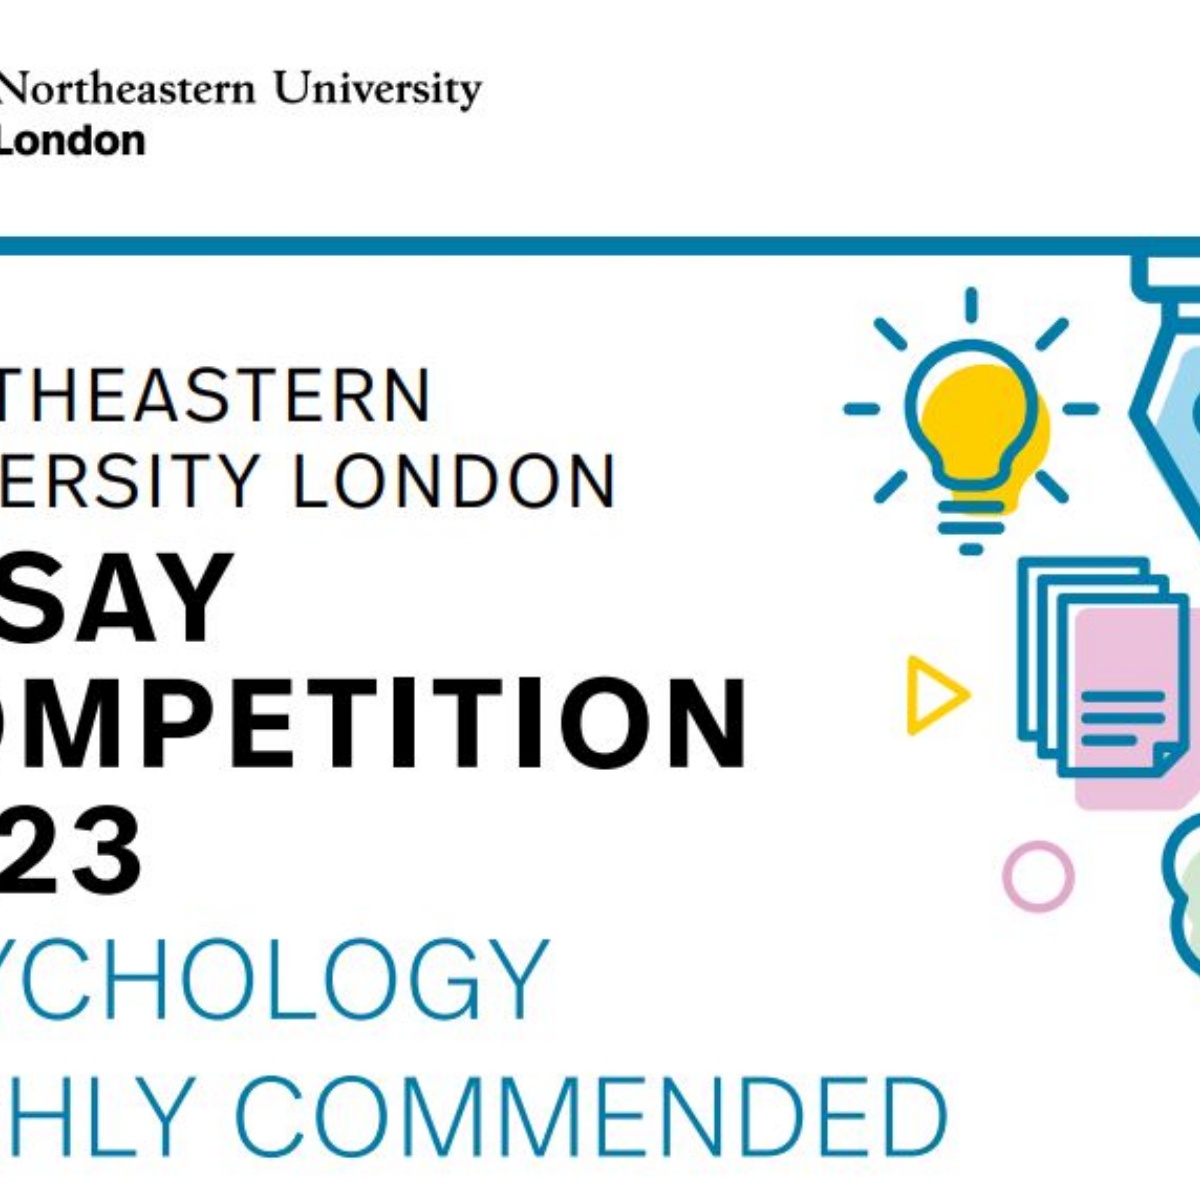 northeastern university london essay competition